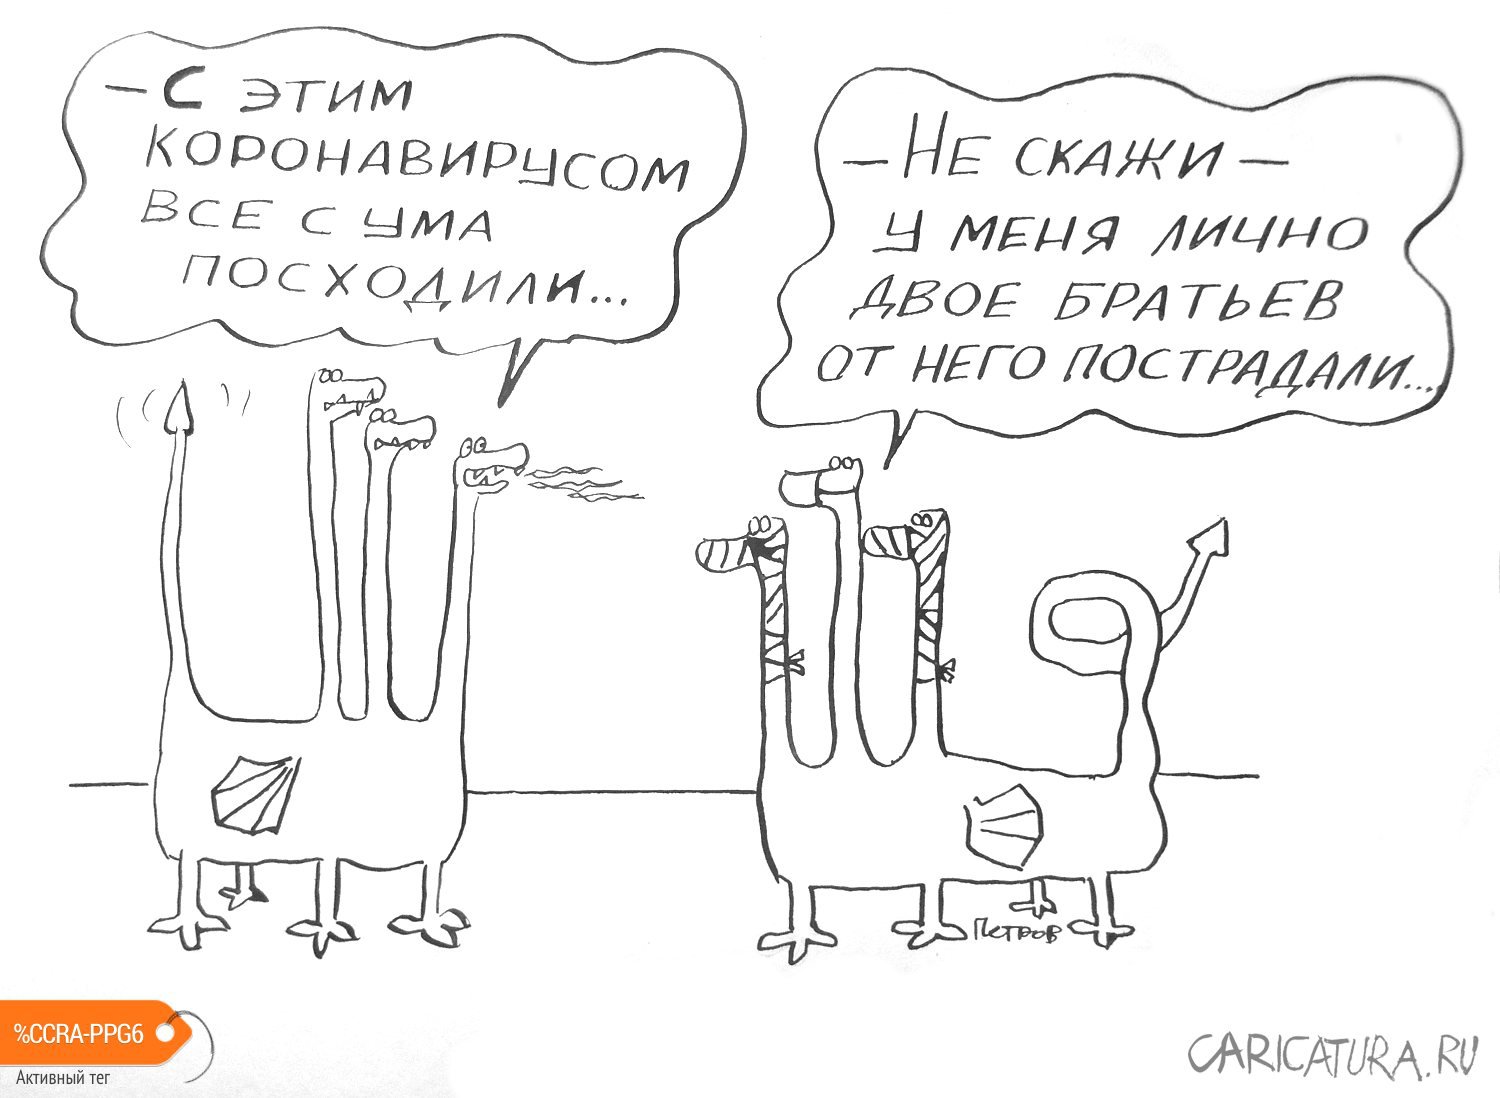 Карикатура "Коронавирус", Александр Петров